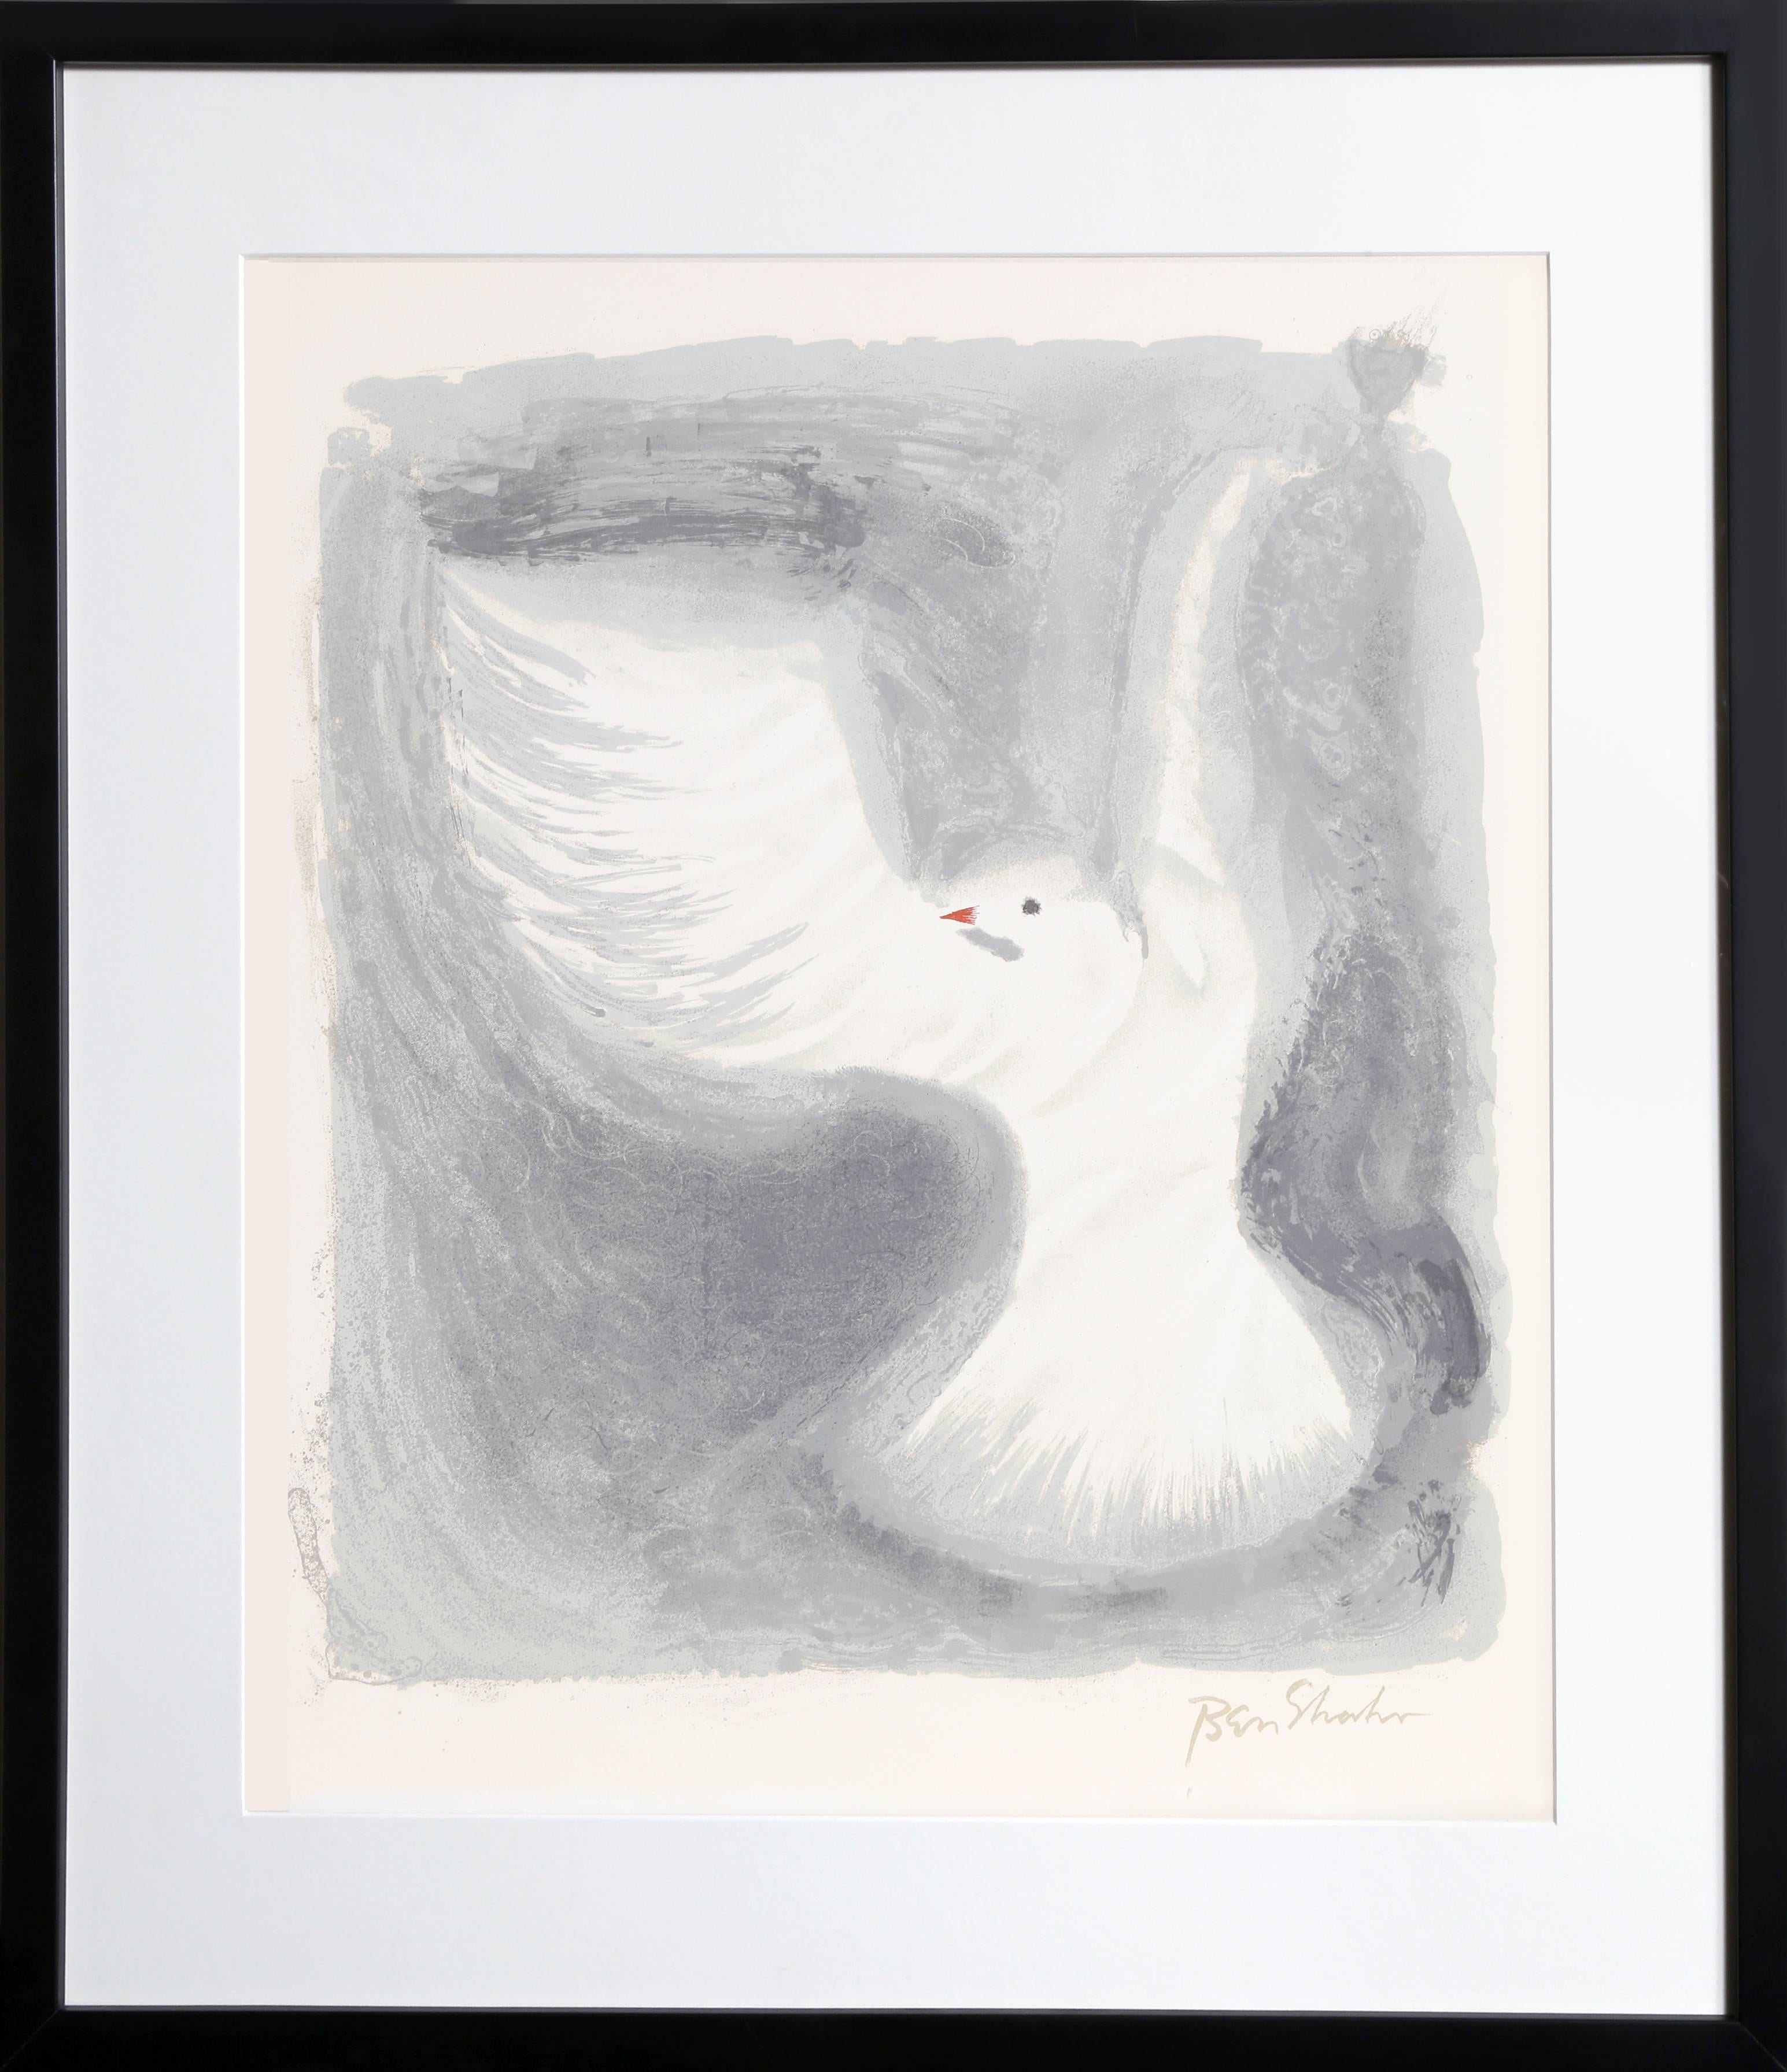 Ben Shahn Figurative Print - How the Birds Fly